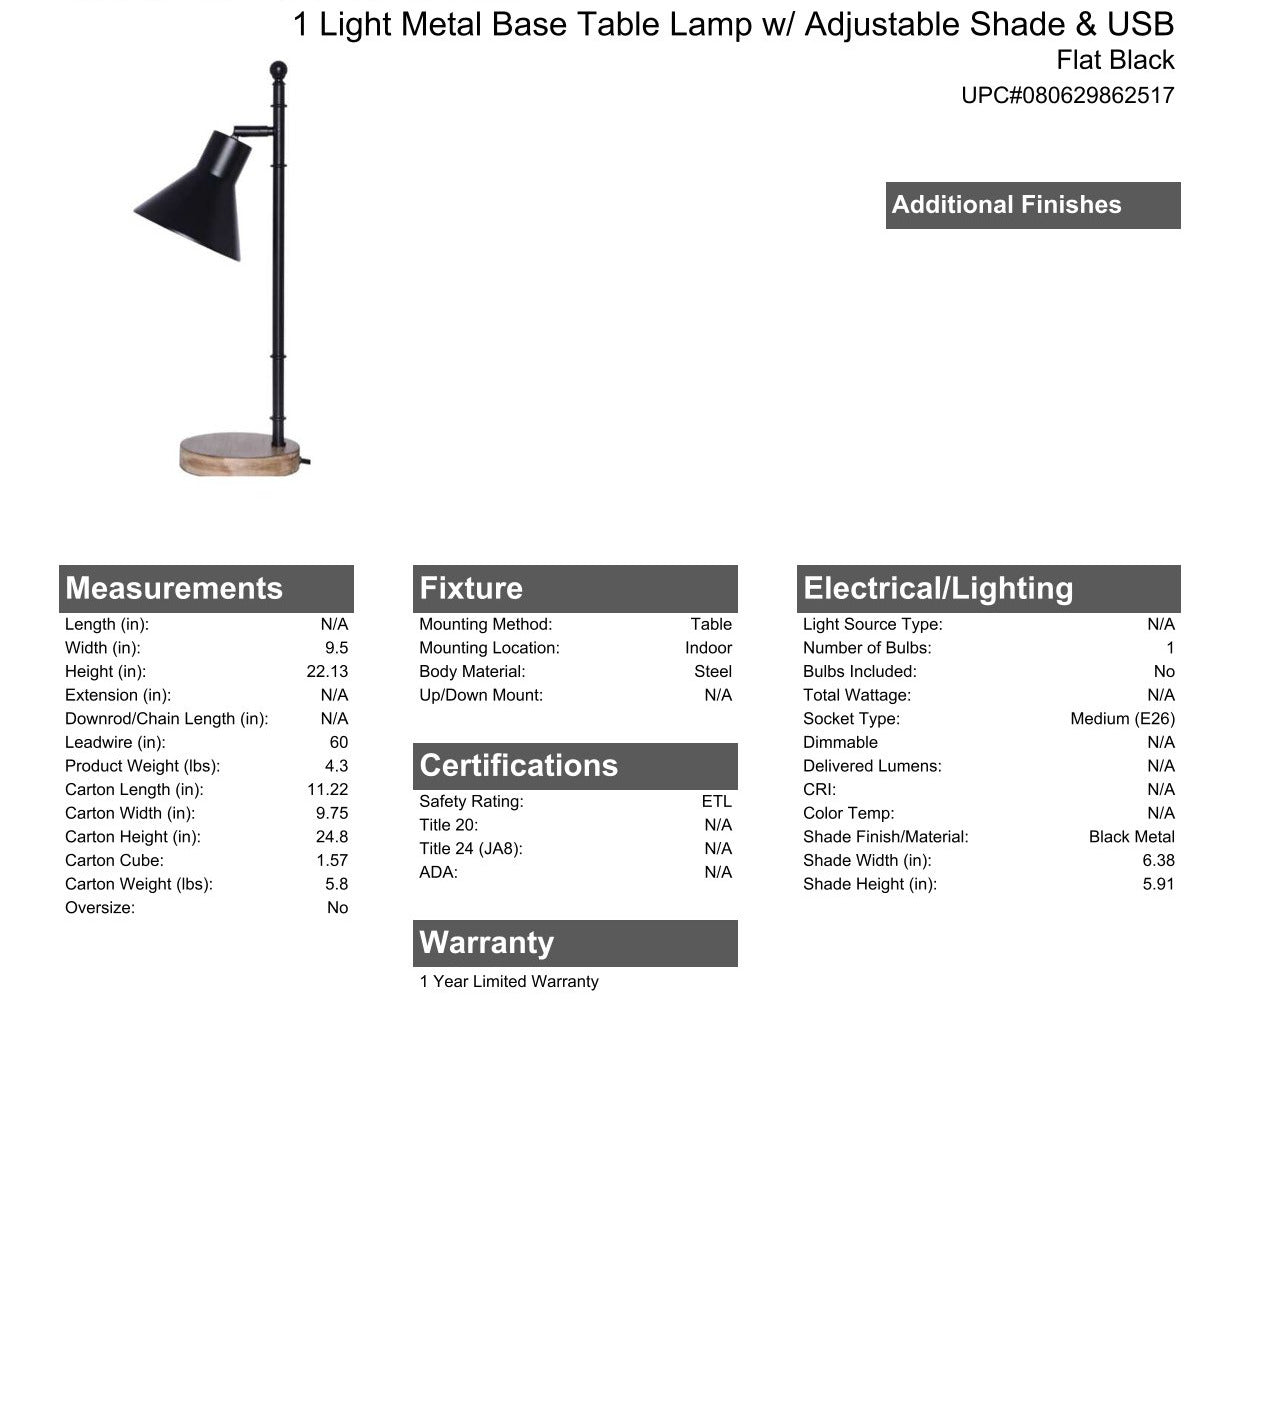 1 Light Metal Base Table Lamp w/ Adjustable Shade & USB in Flat Black